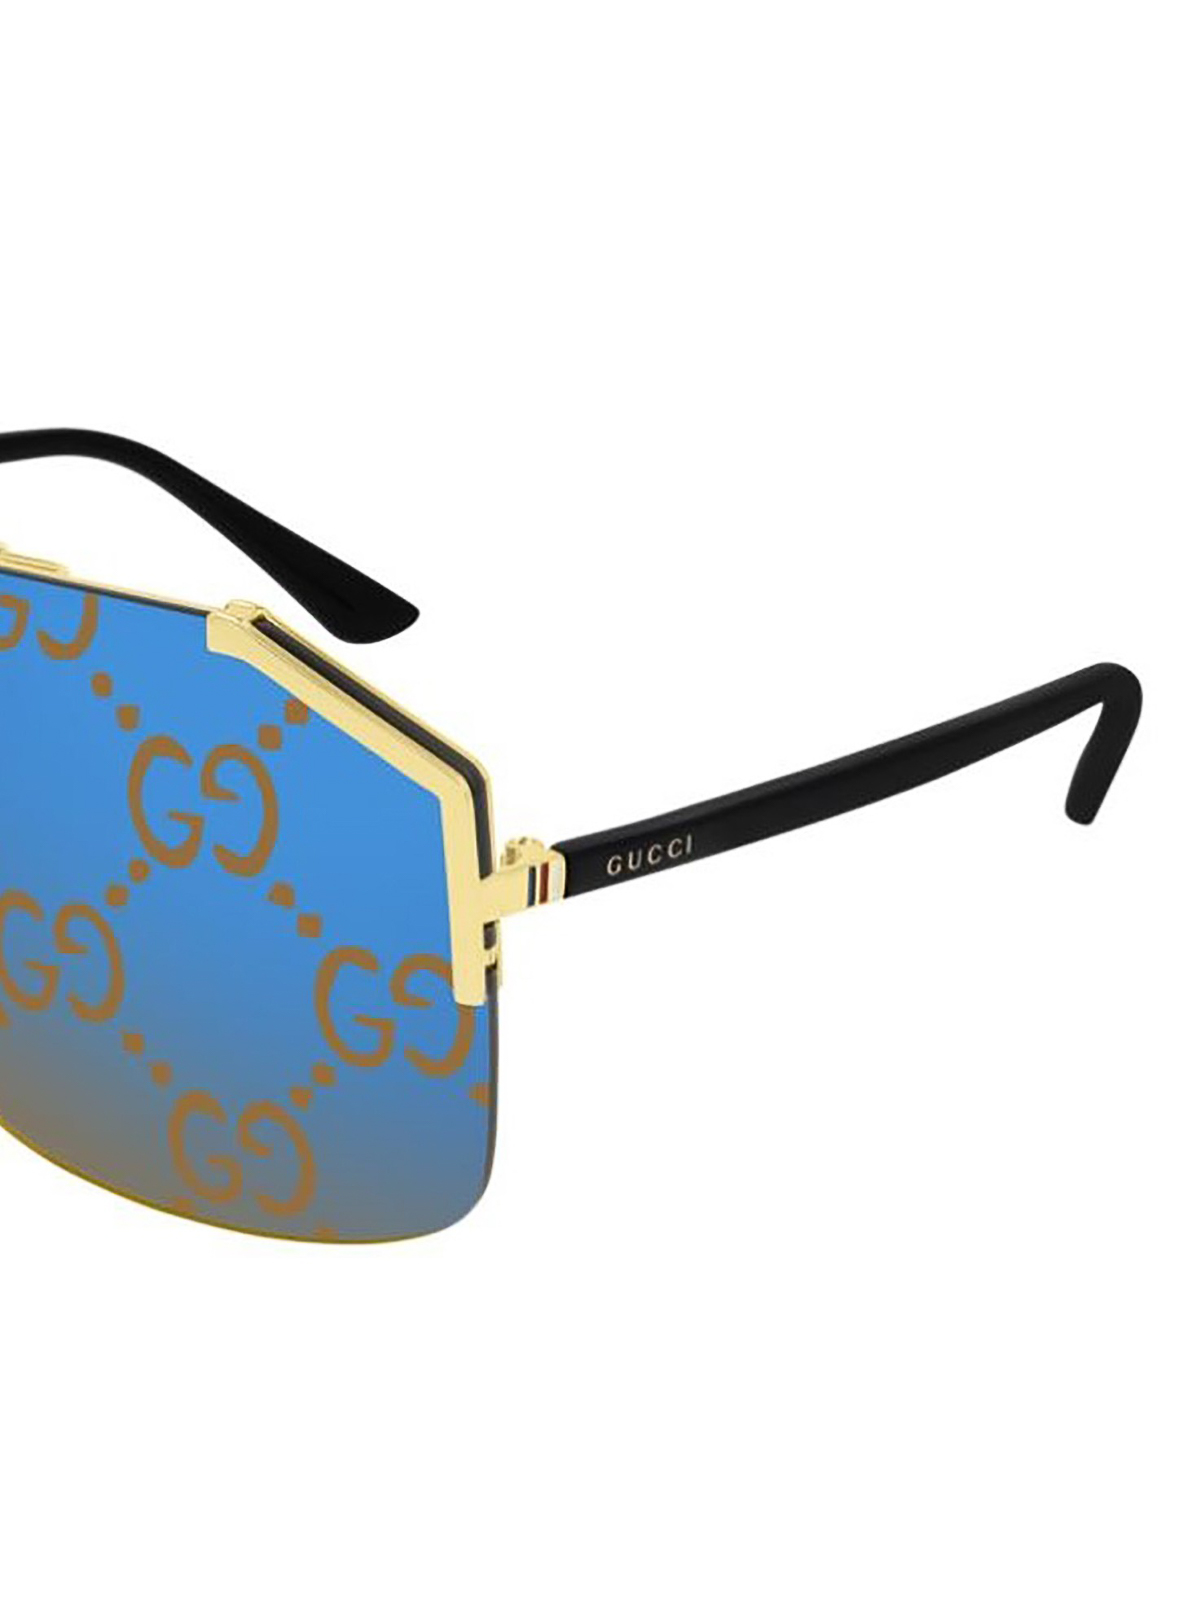 gucci sunglasses with logo